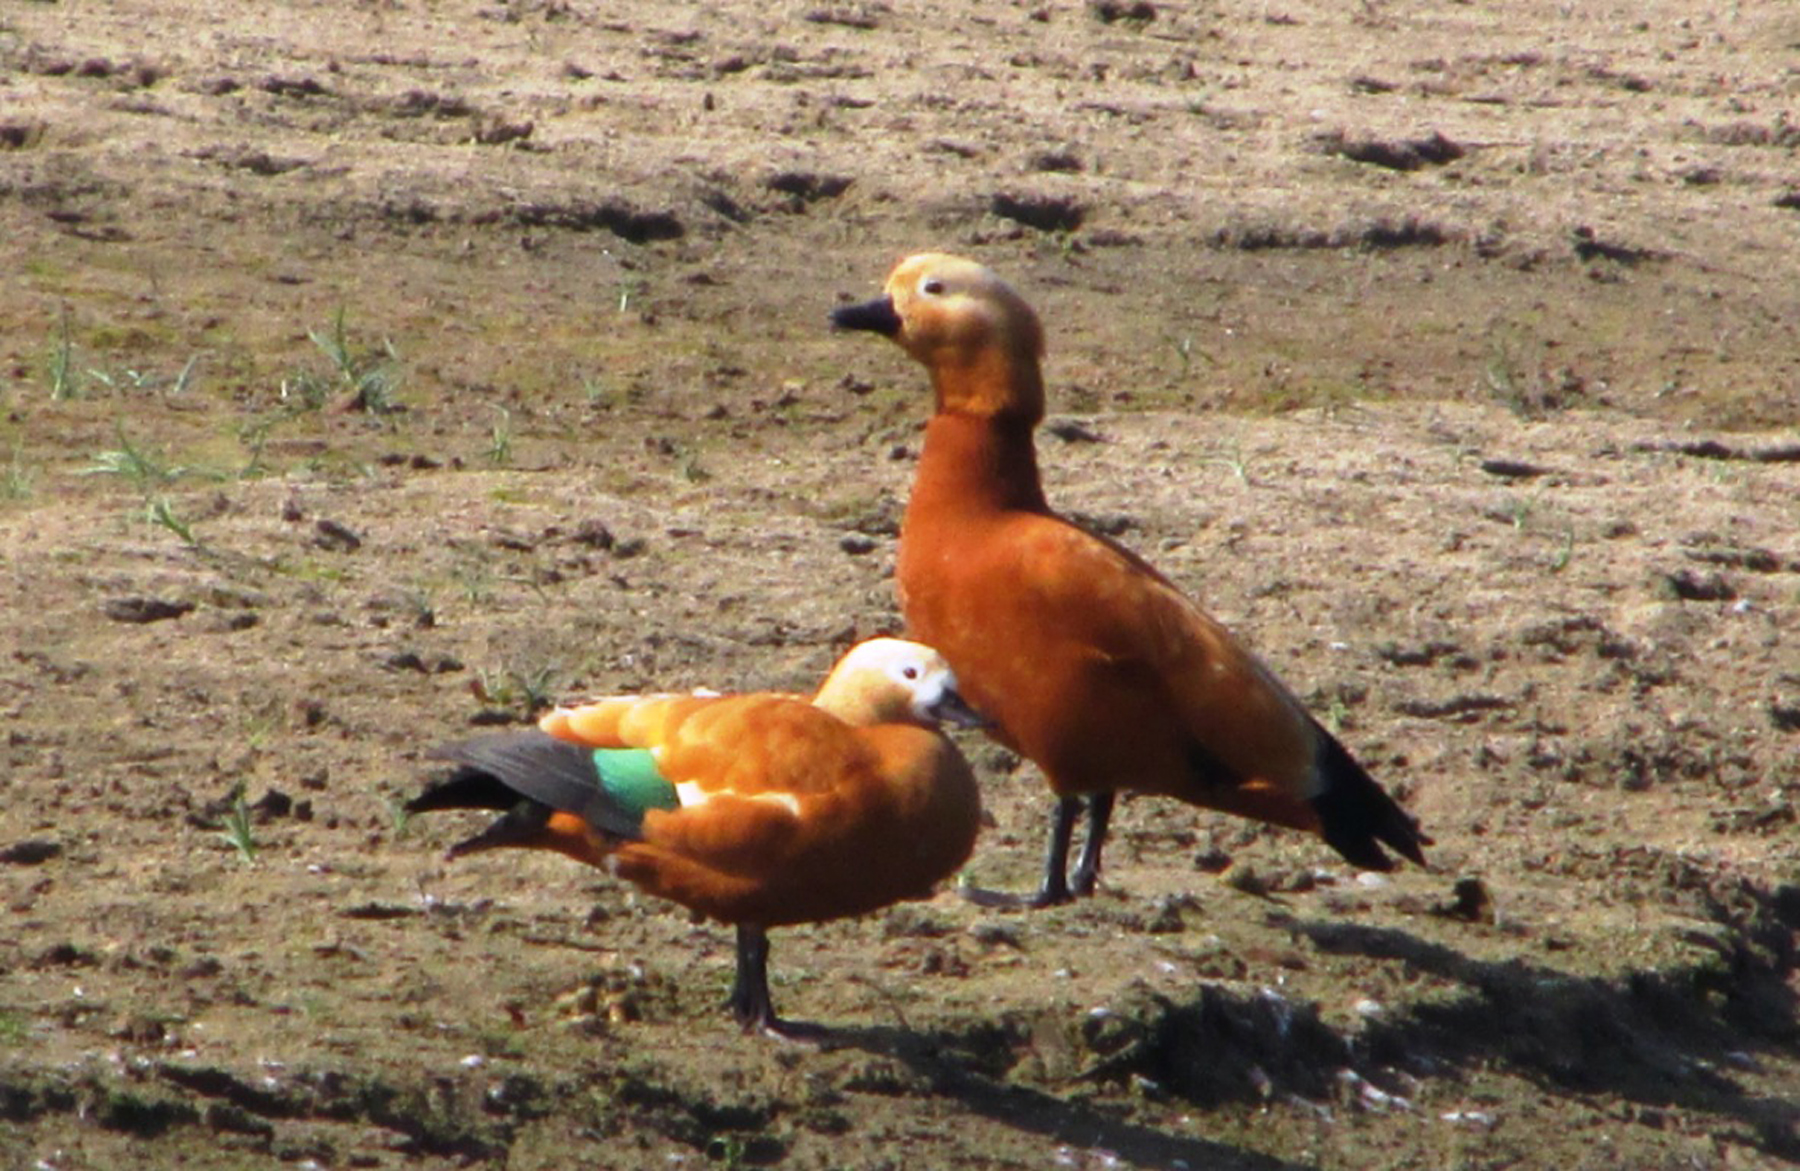 Bird census in progress in Manohara area